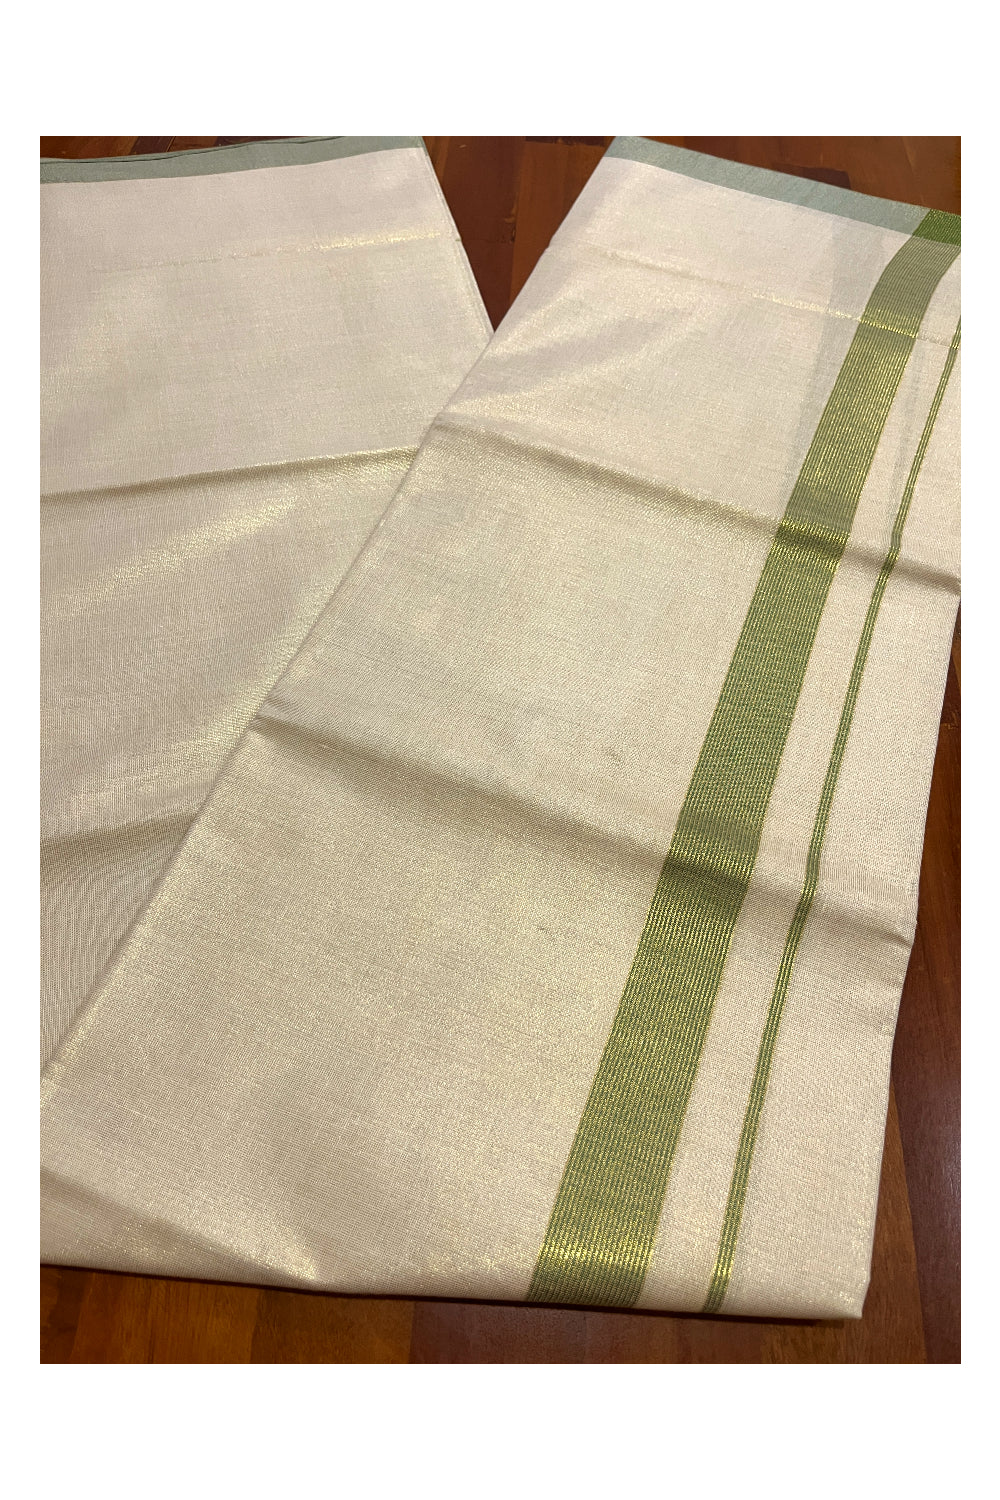 Kerala Tissue Otta Mundu with Green Lines Border (South Indian Kerala Dhoti)